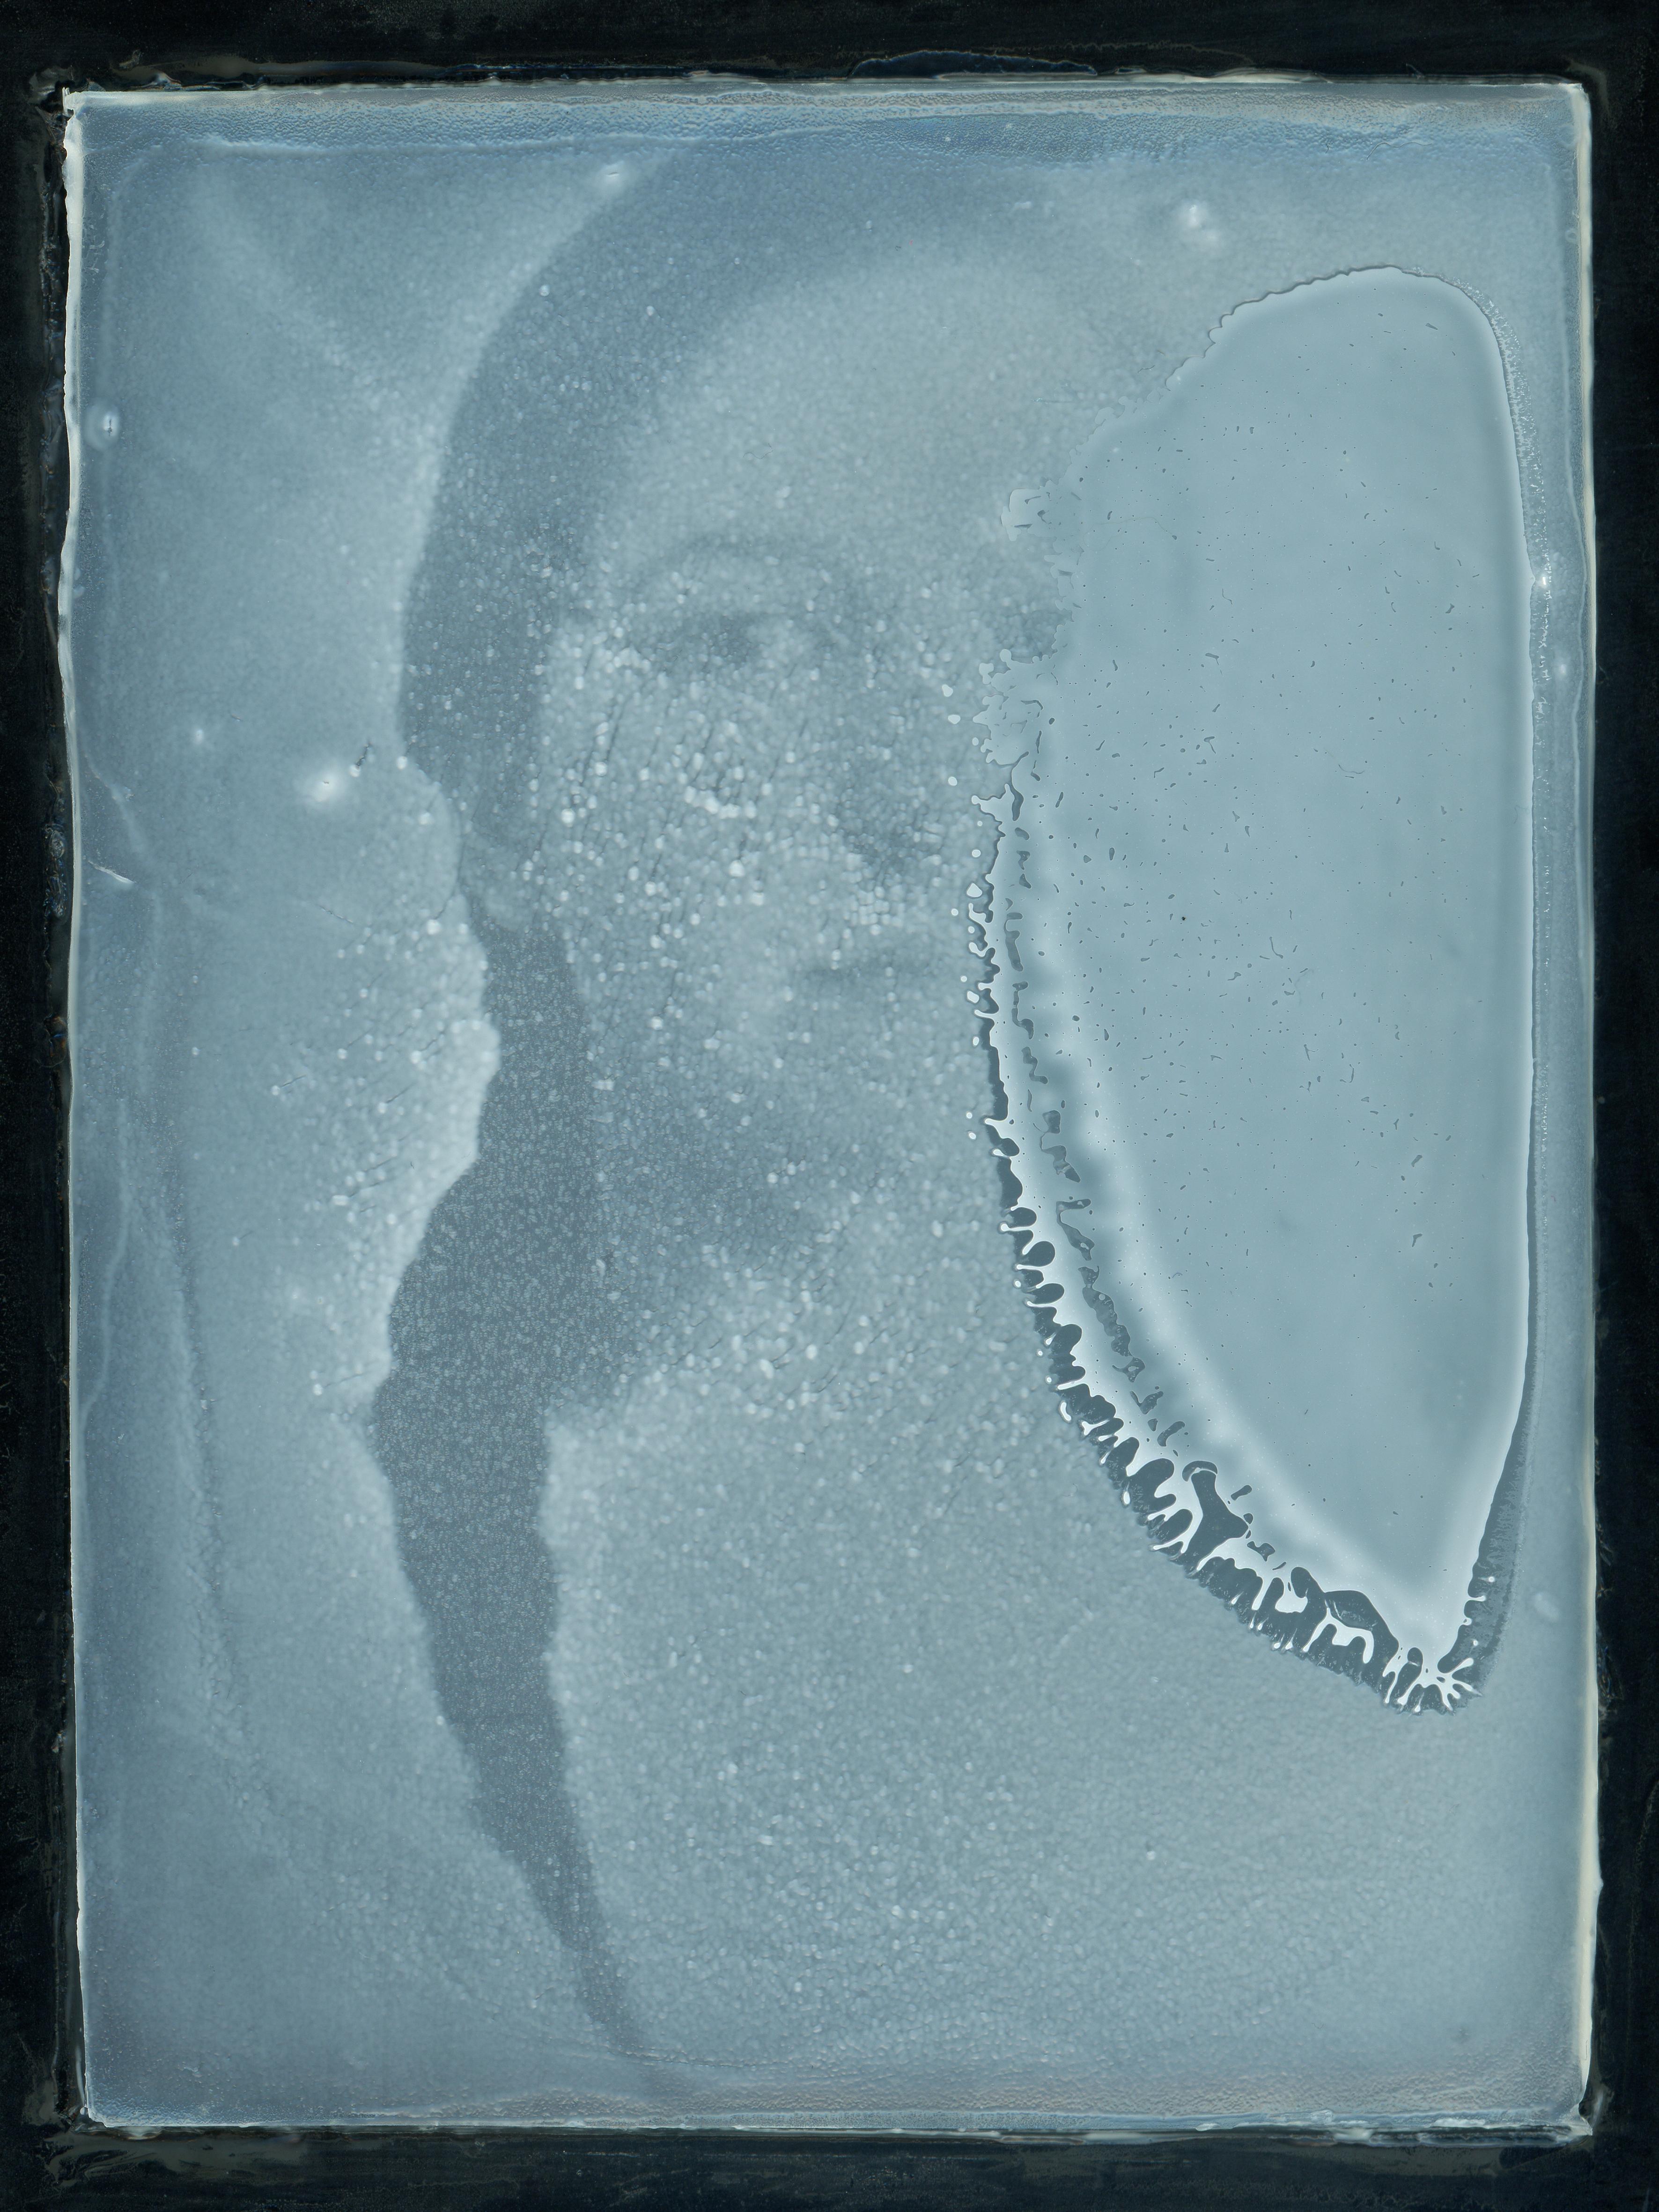 Yeasted Teresa - Contemporain, Conceptuel, Polaroid, 21e Siècle, Portrait